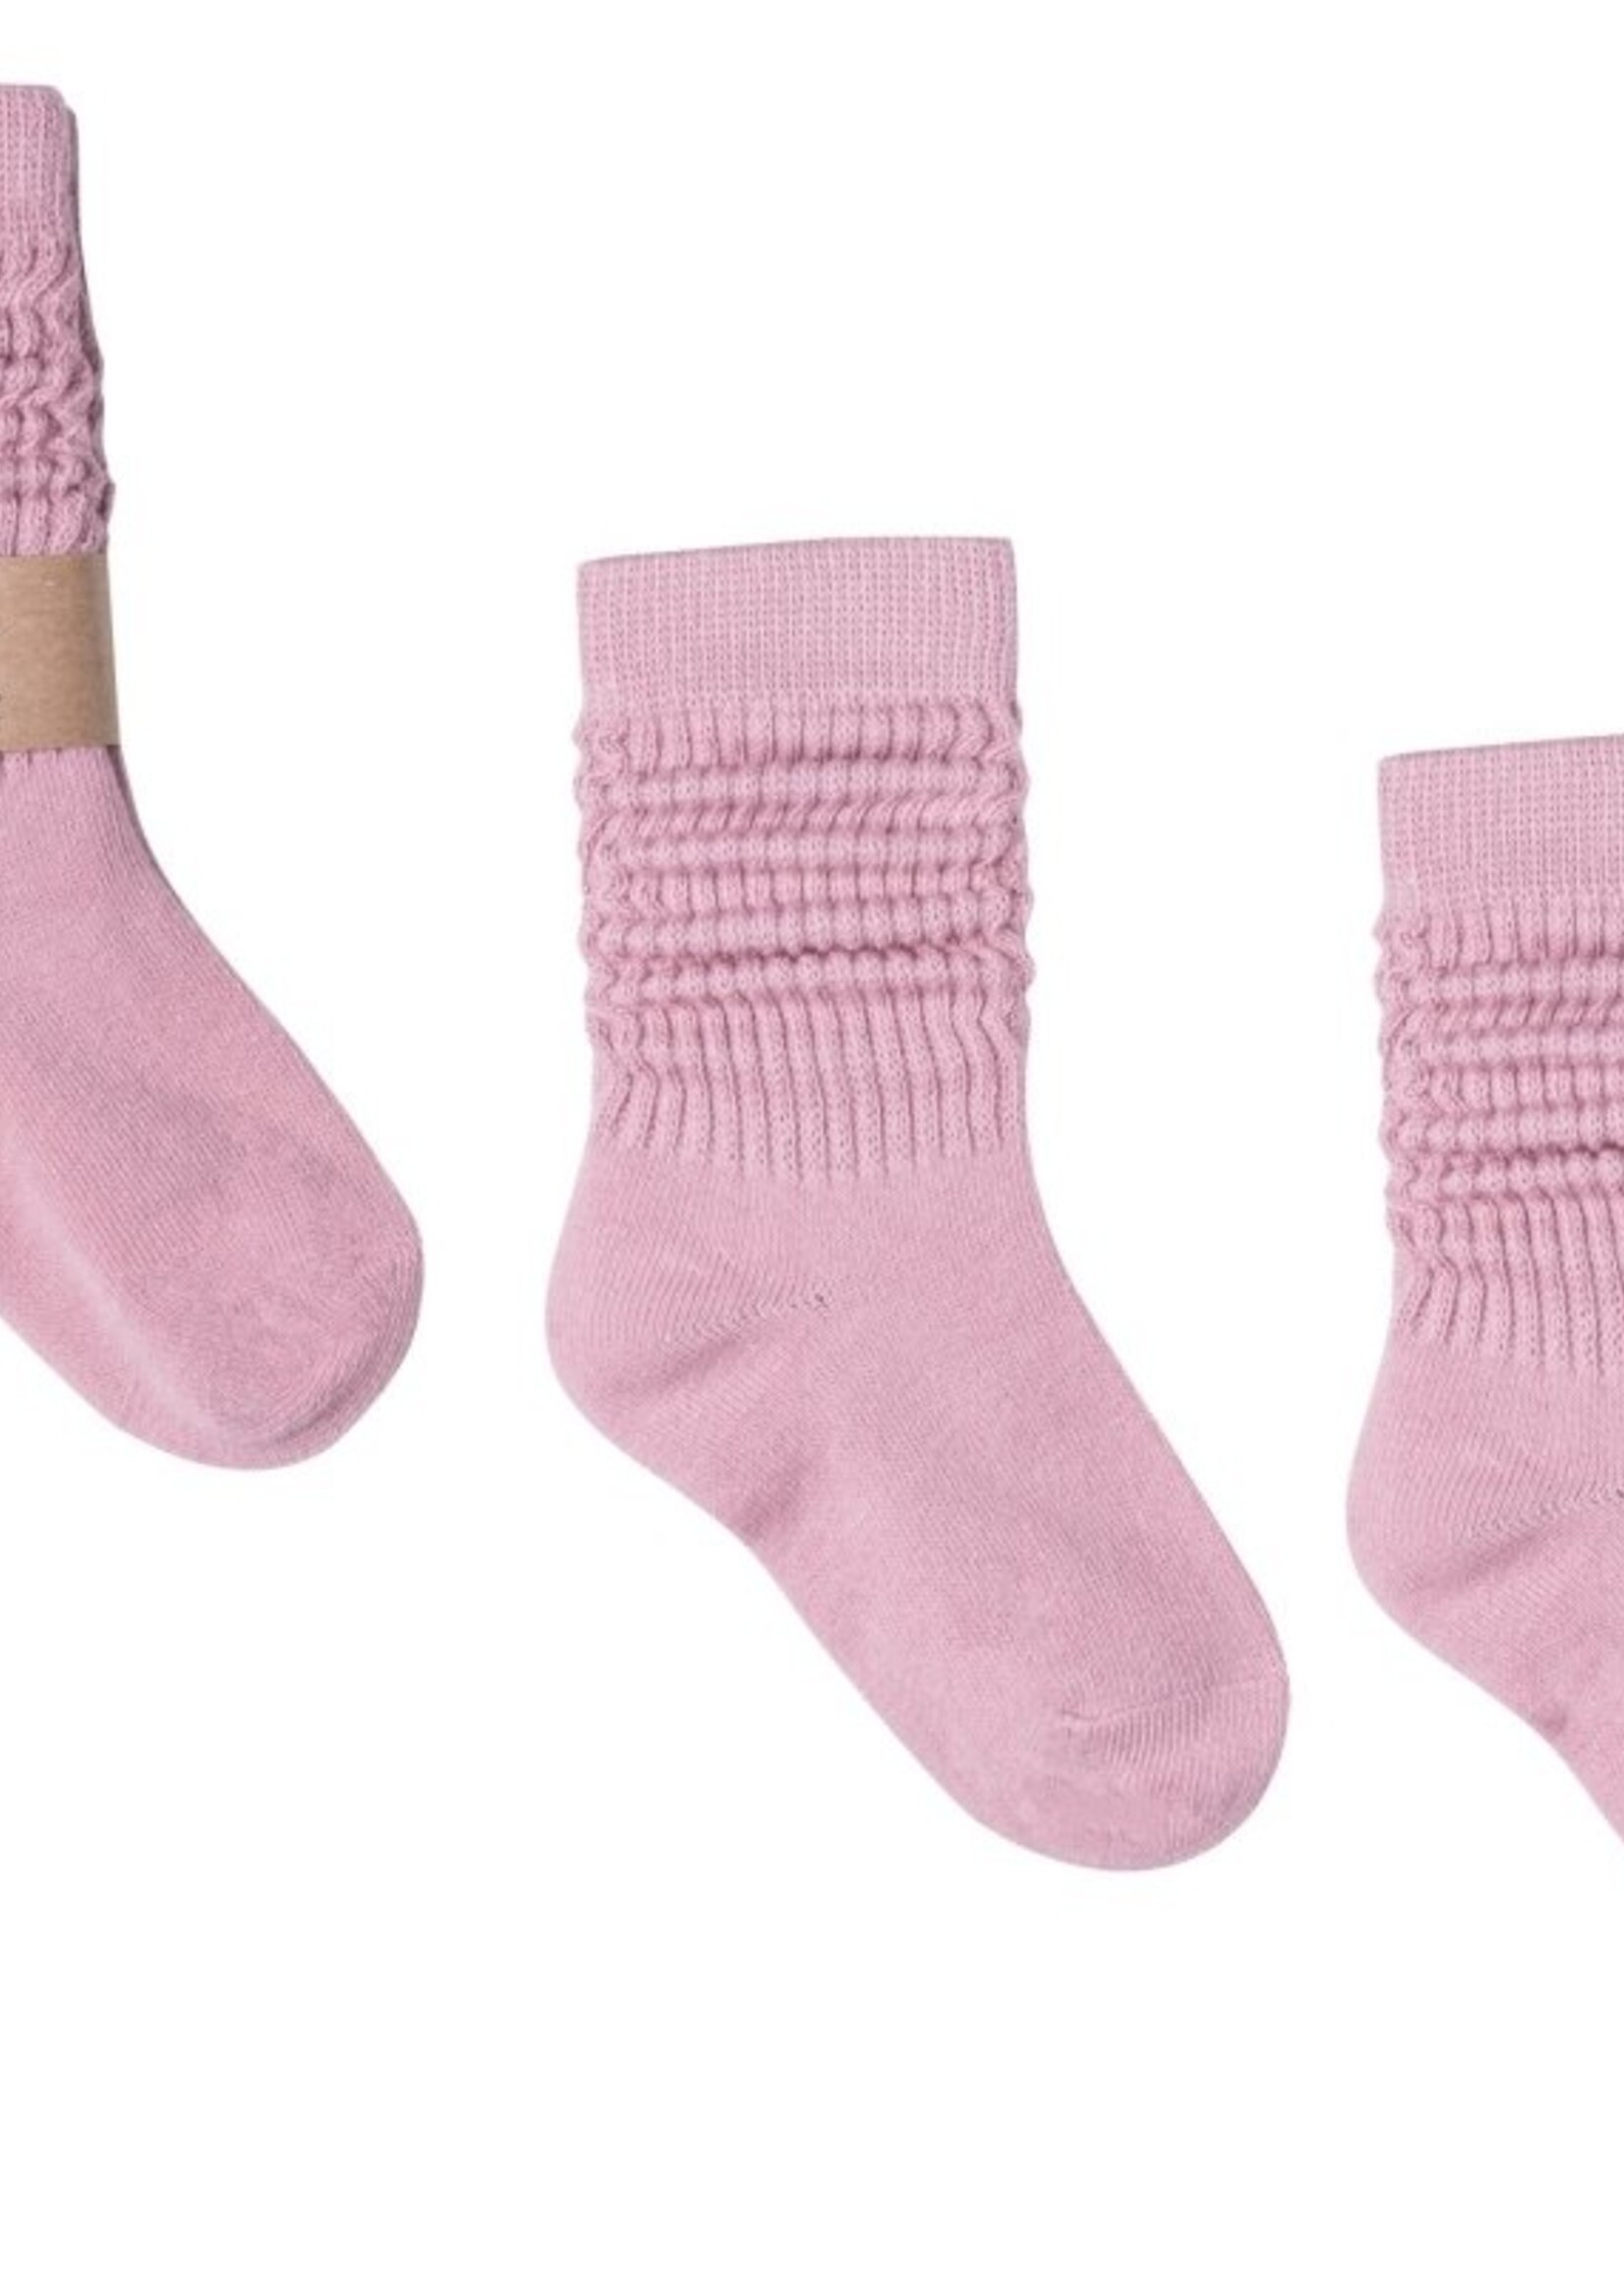 Mama's feet Dream socks pink